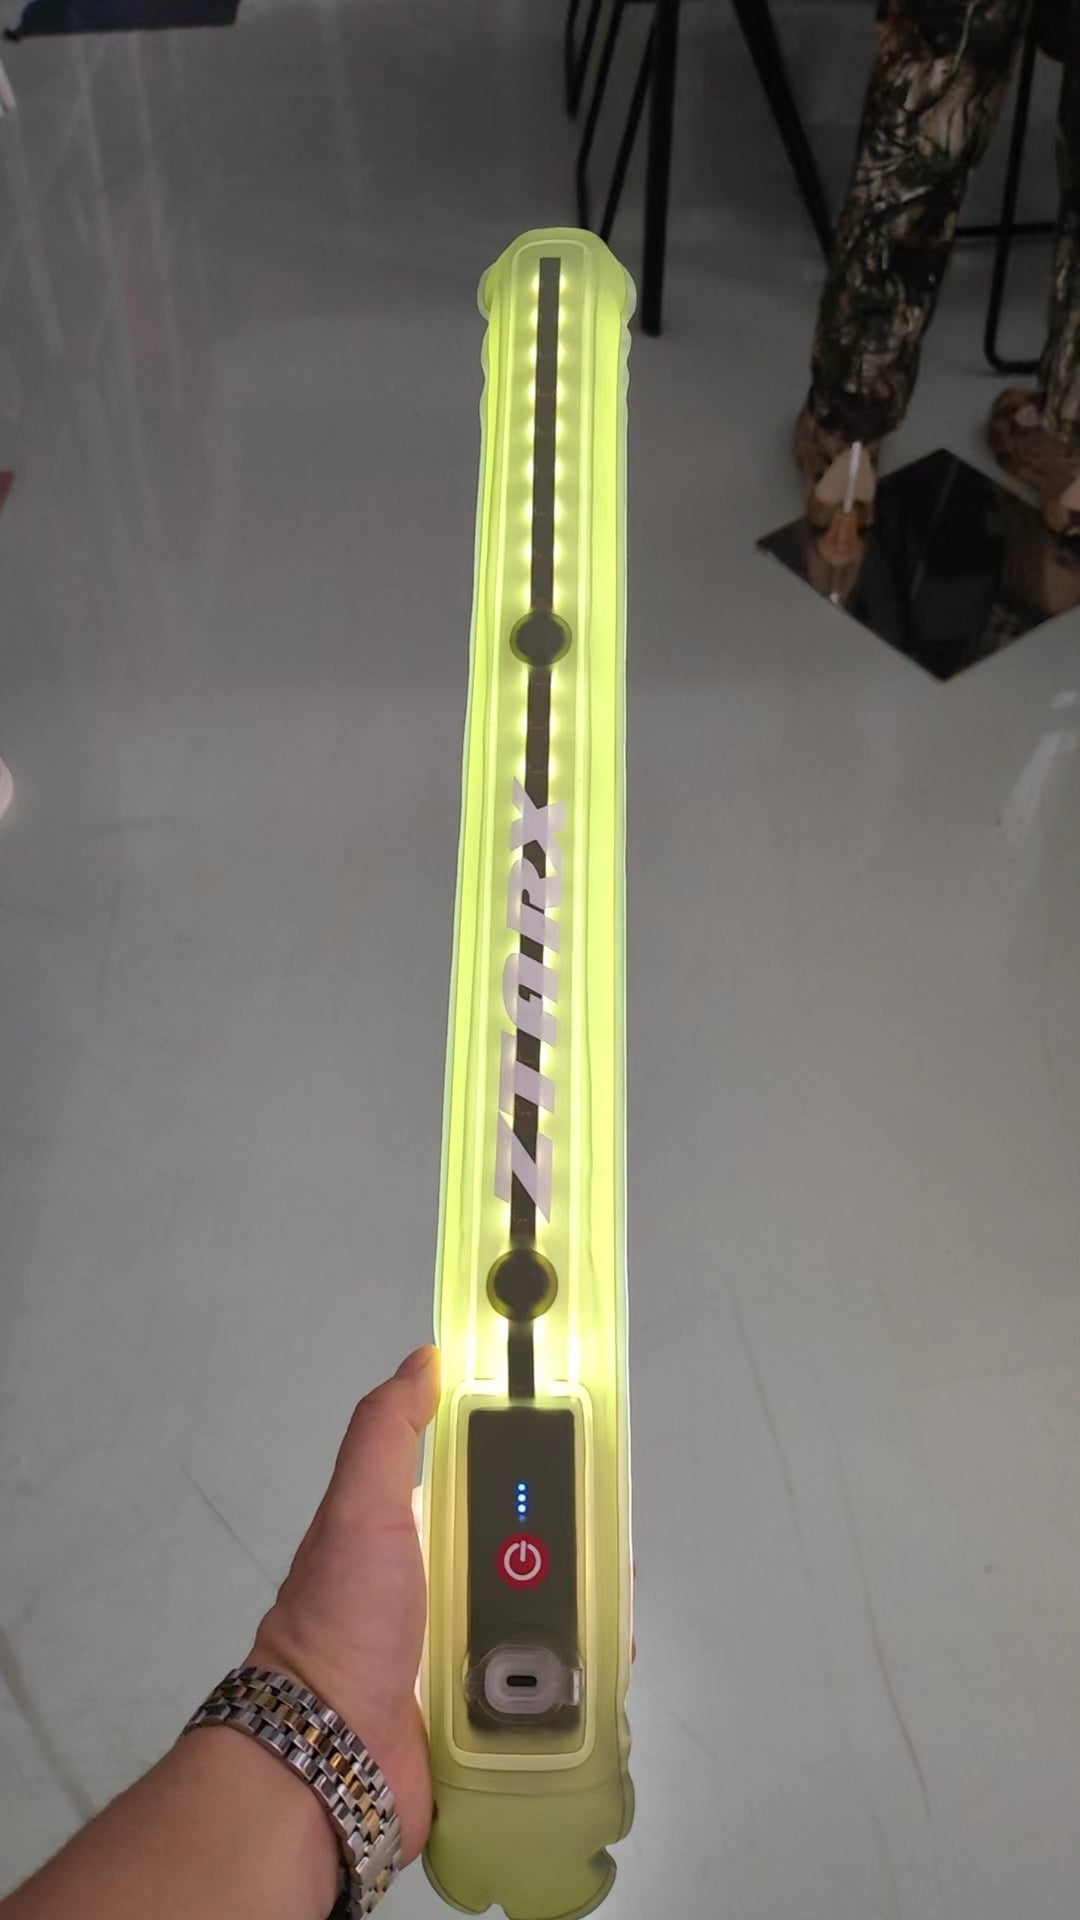 ZTARX Emergency Light Tube: Durable Lighting Solution for Emergencies